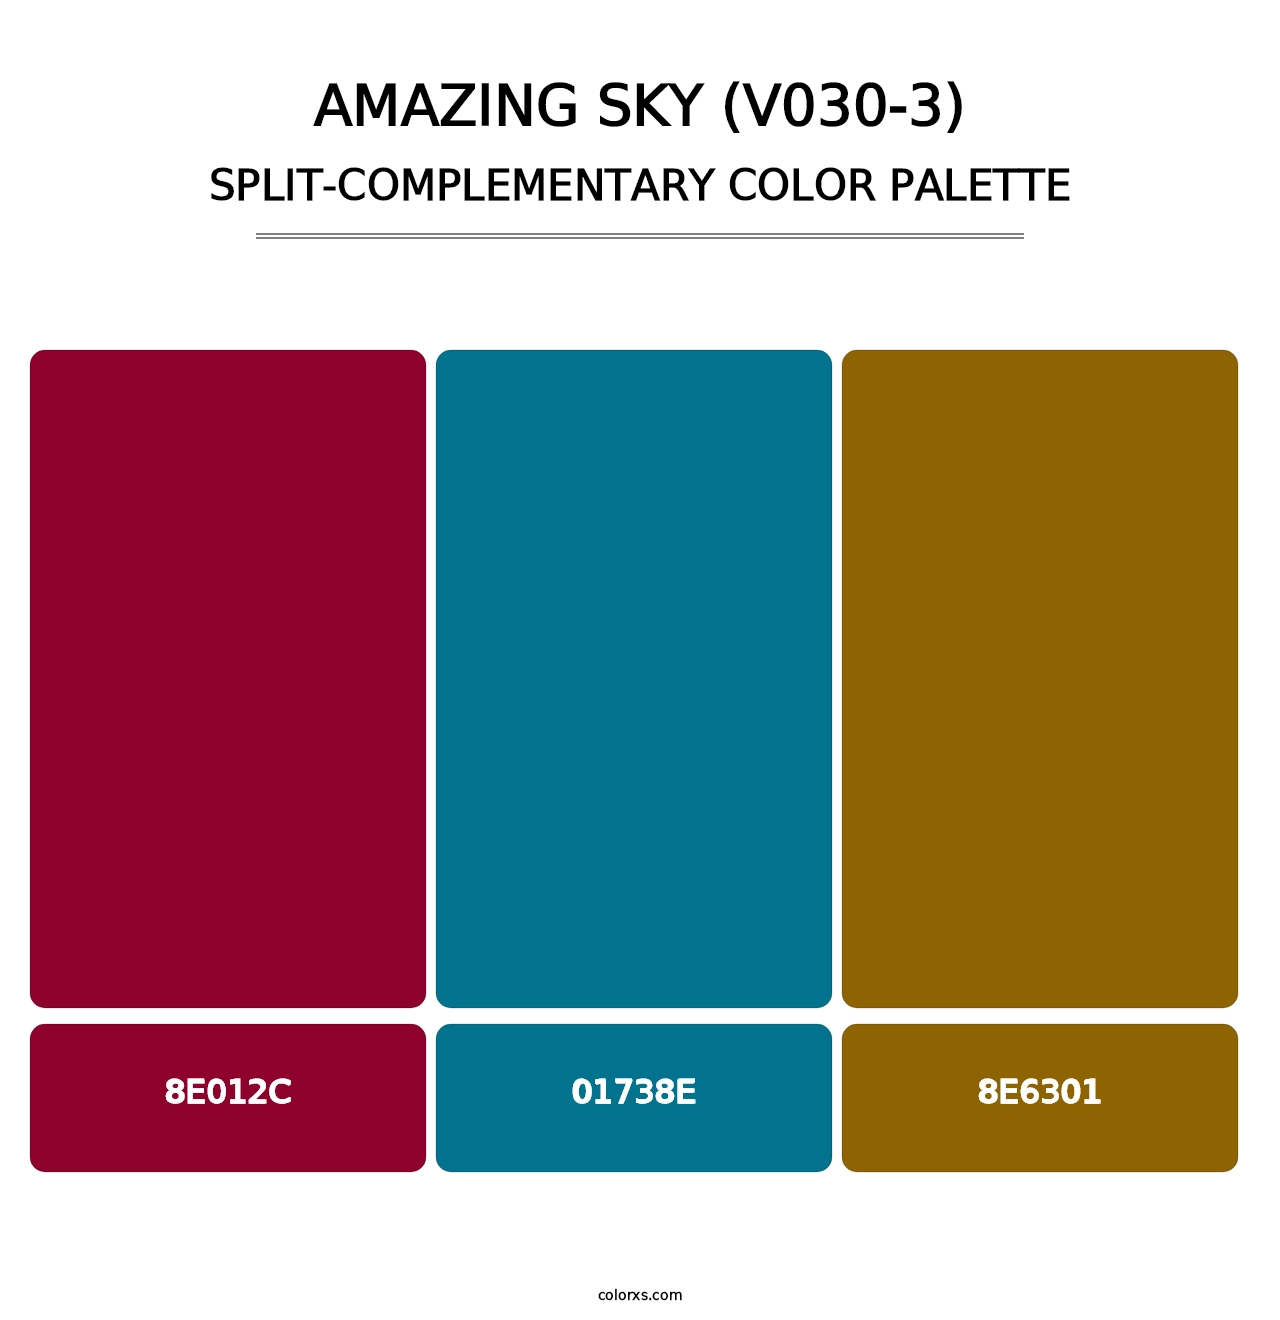 Amazing Sky (V030-3) - Split-Complementary Color Palette